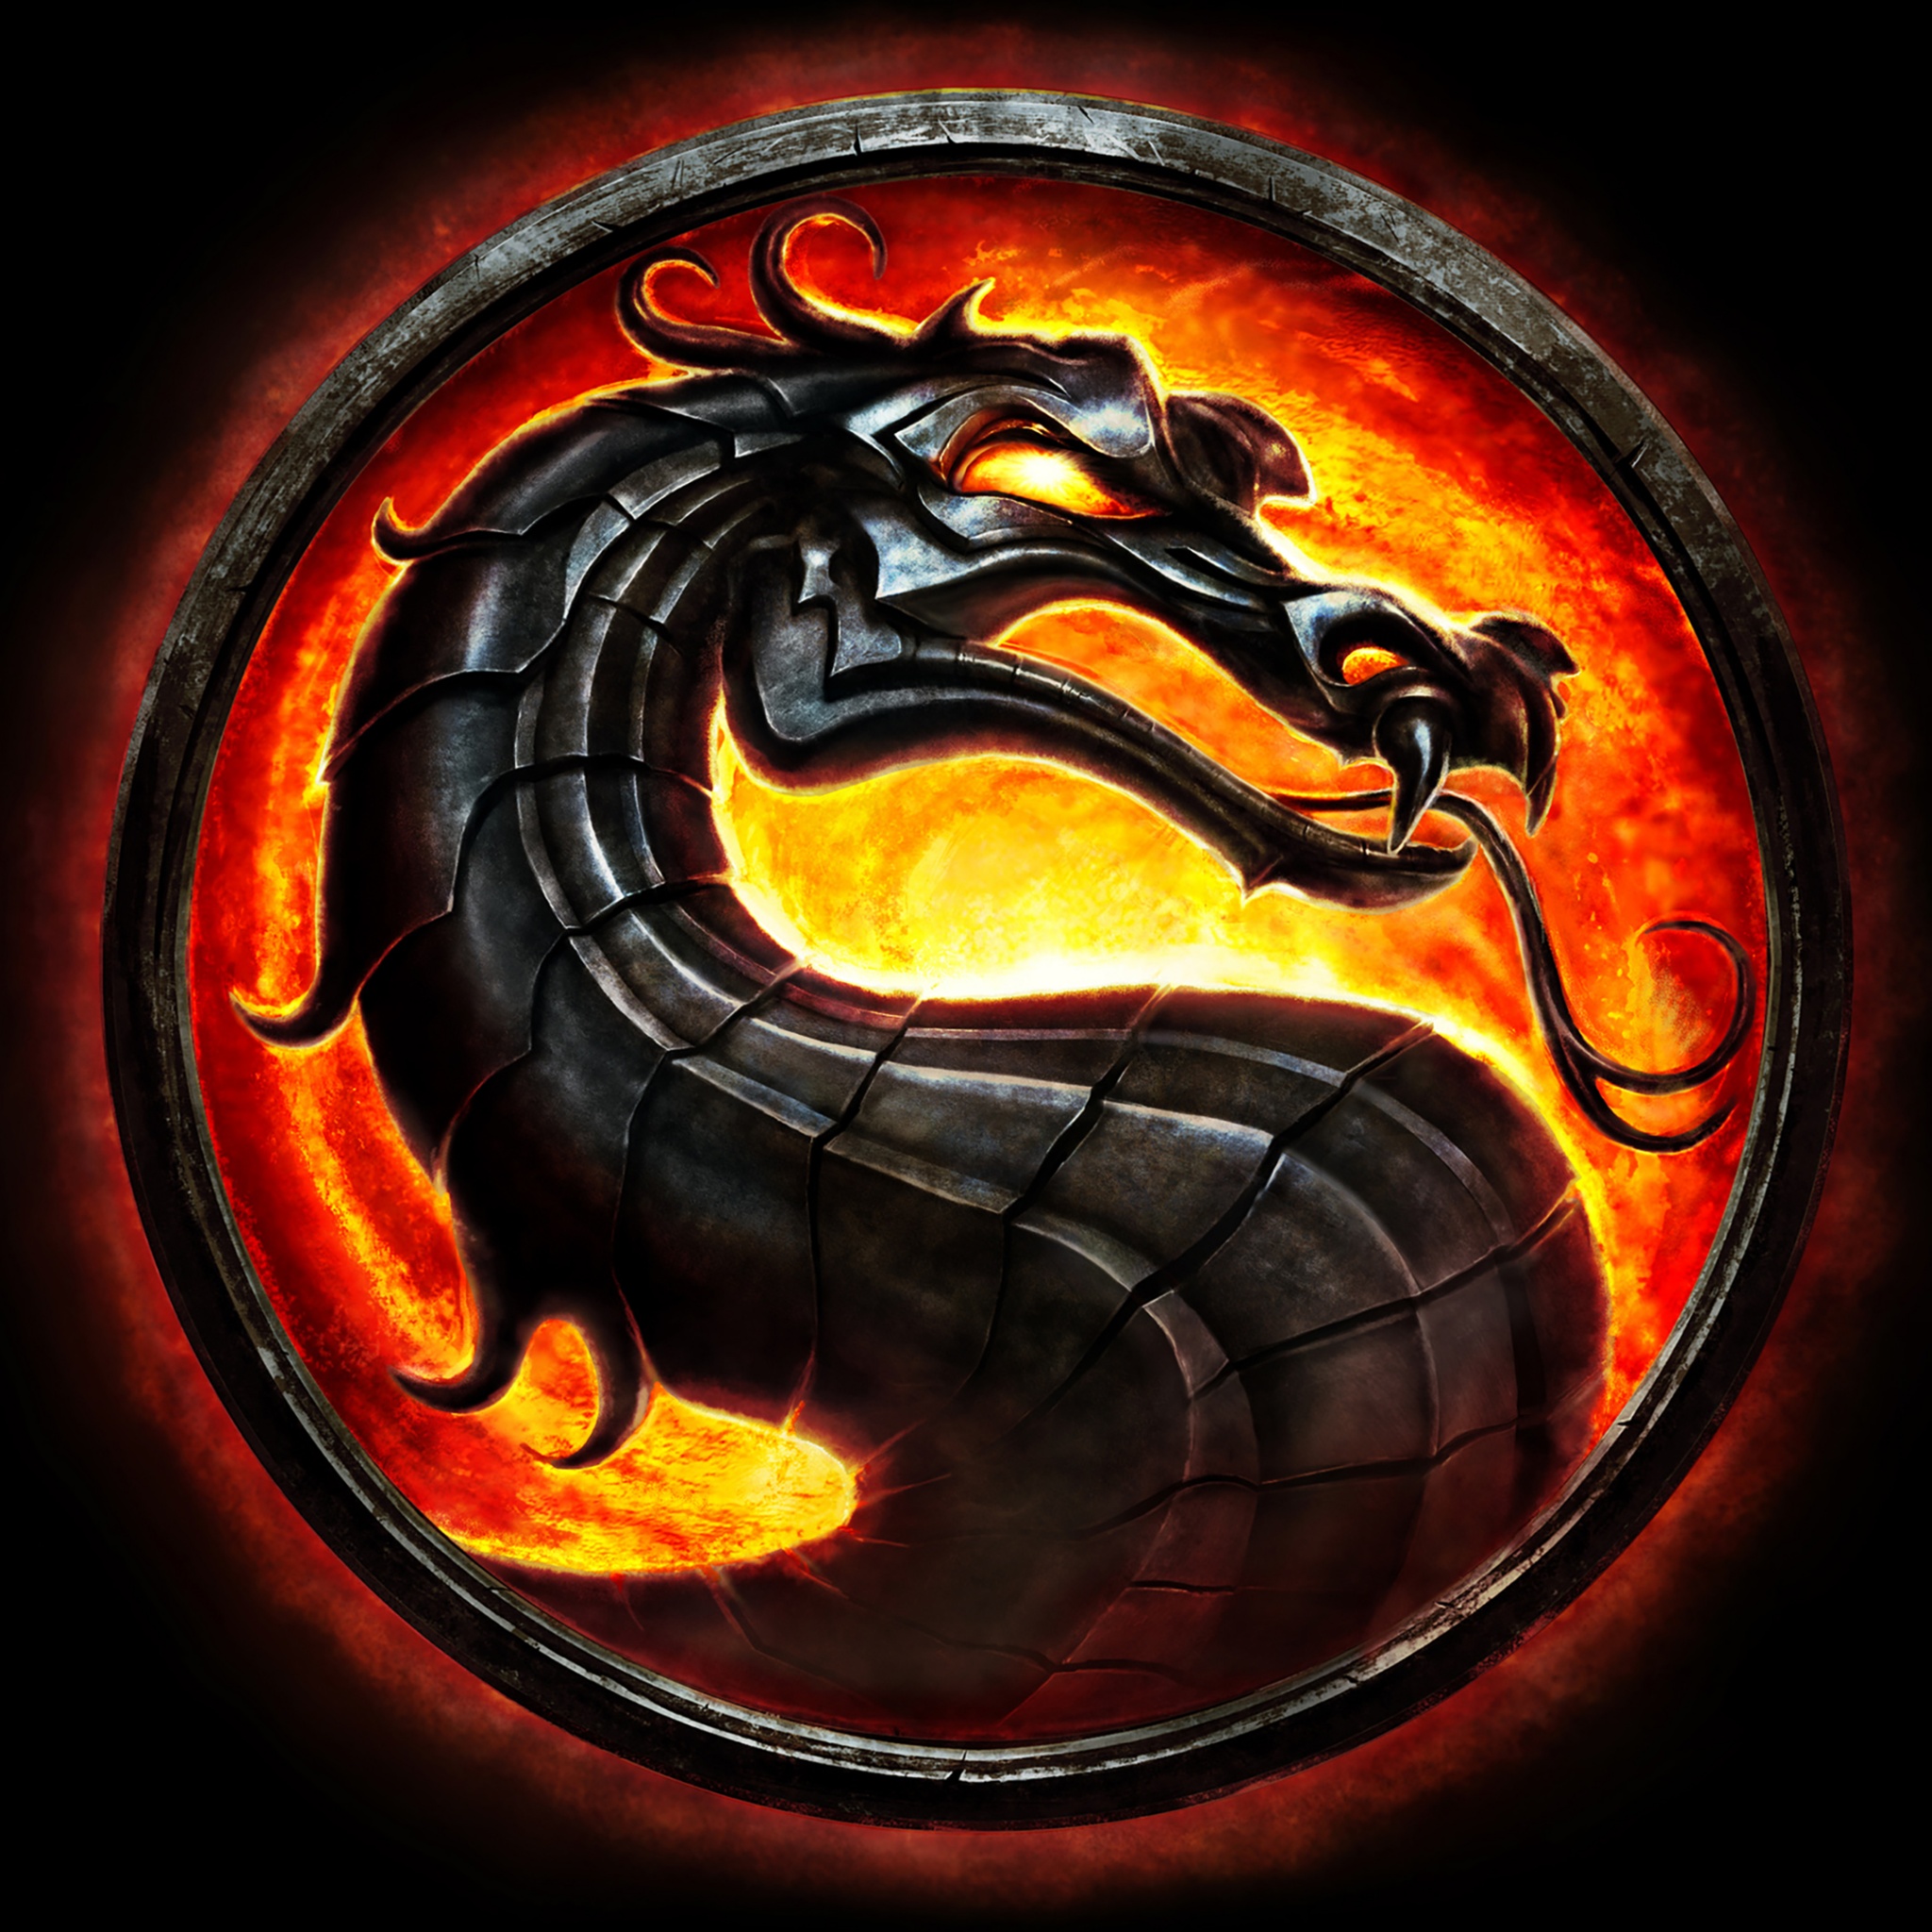 Mortal Kombat Wallpaper 4K, Dragon, Black background, Graphics CGI, #2007